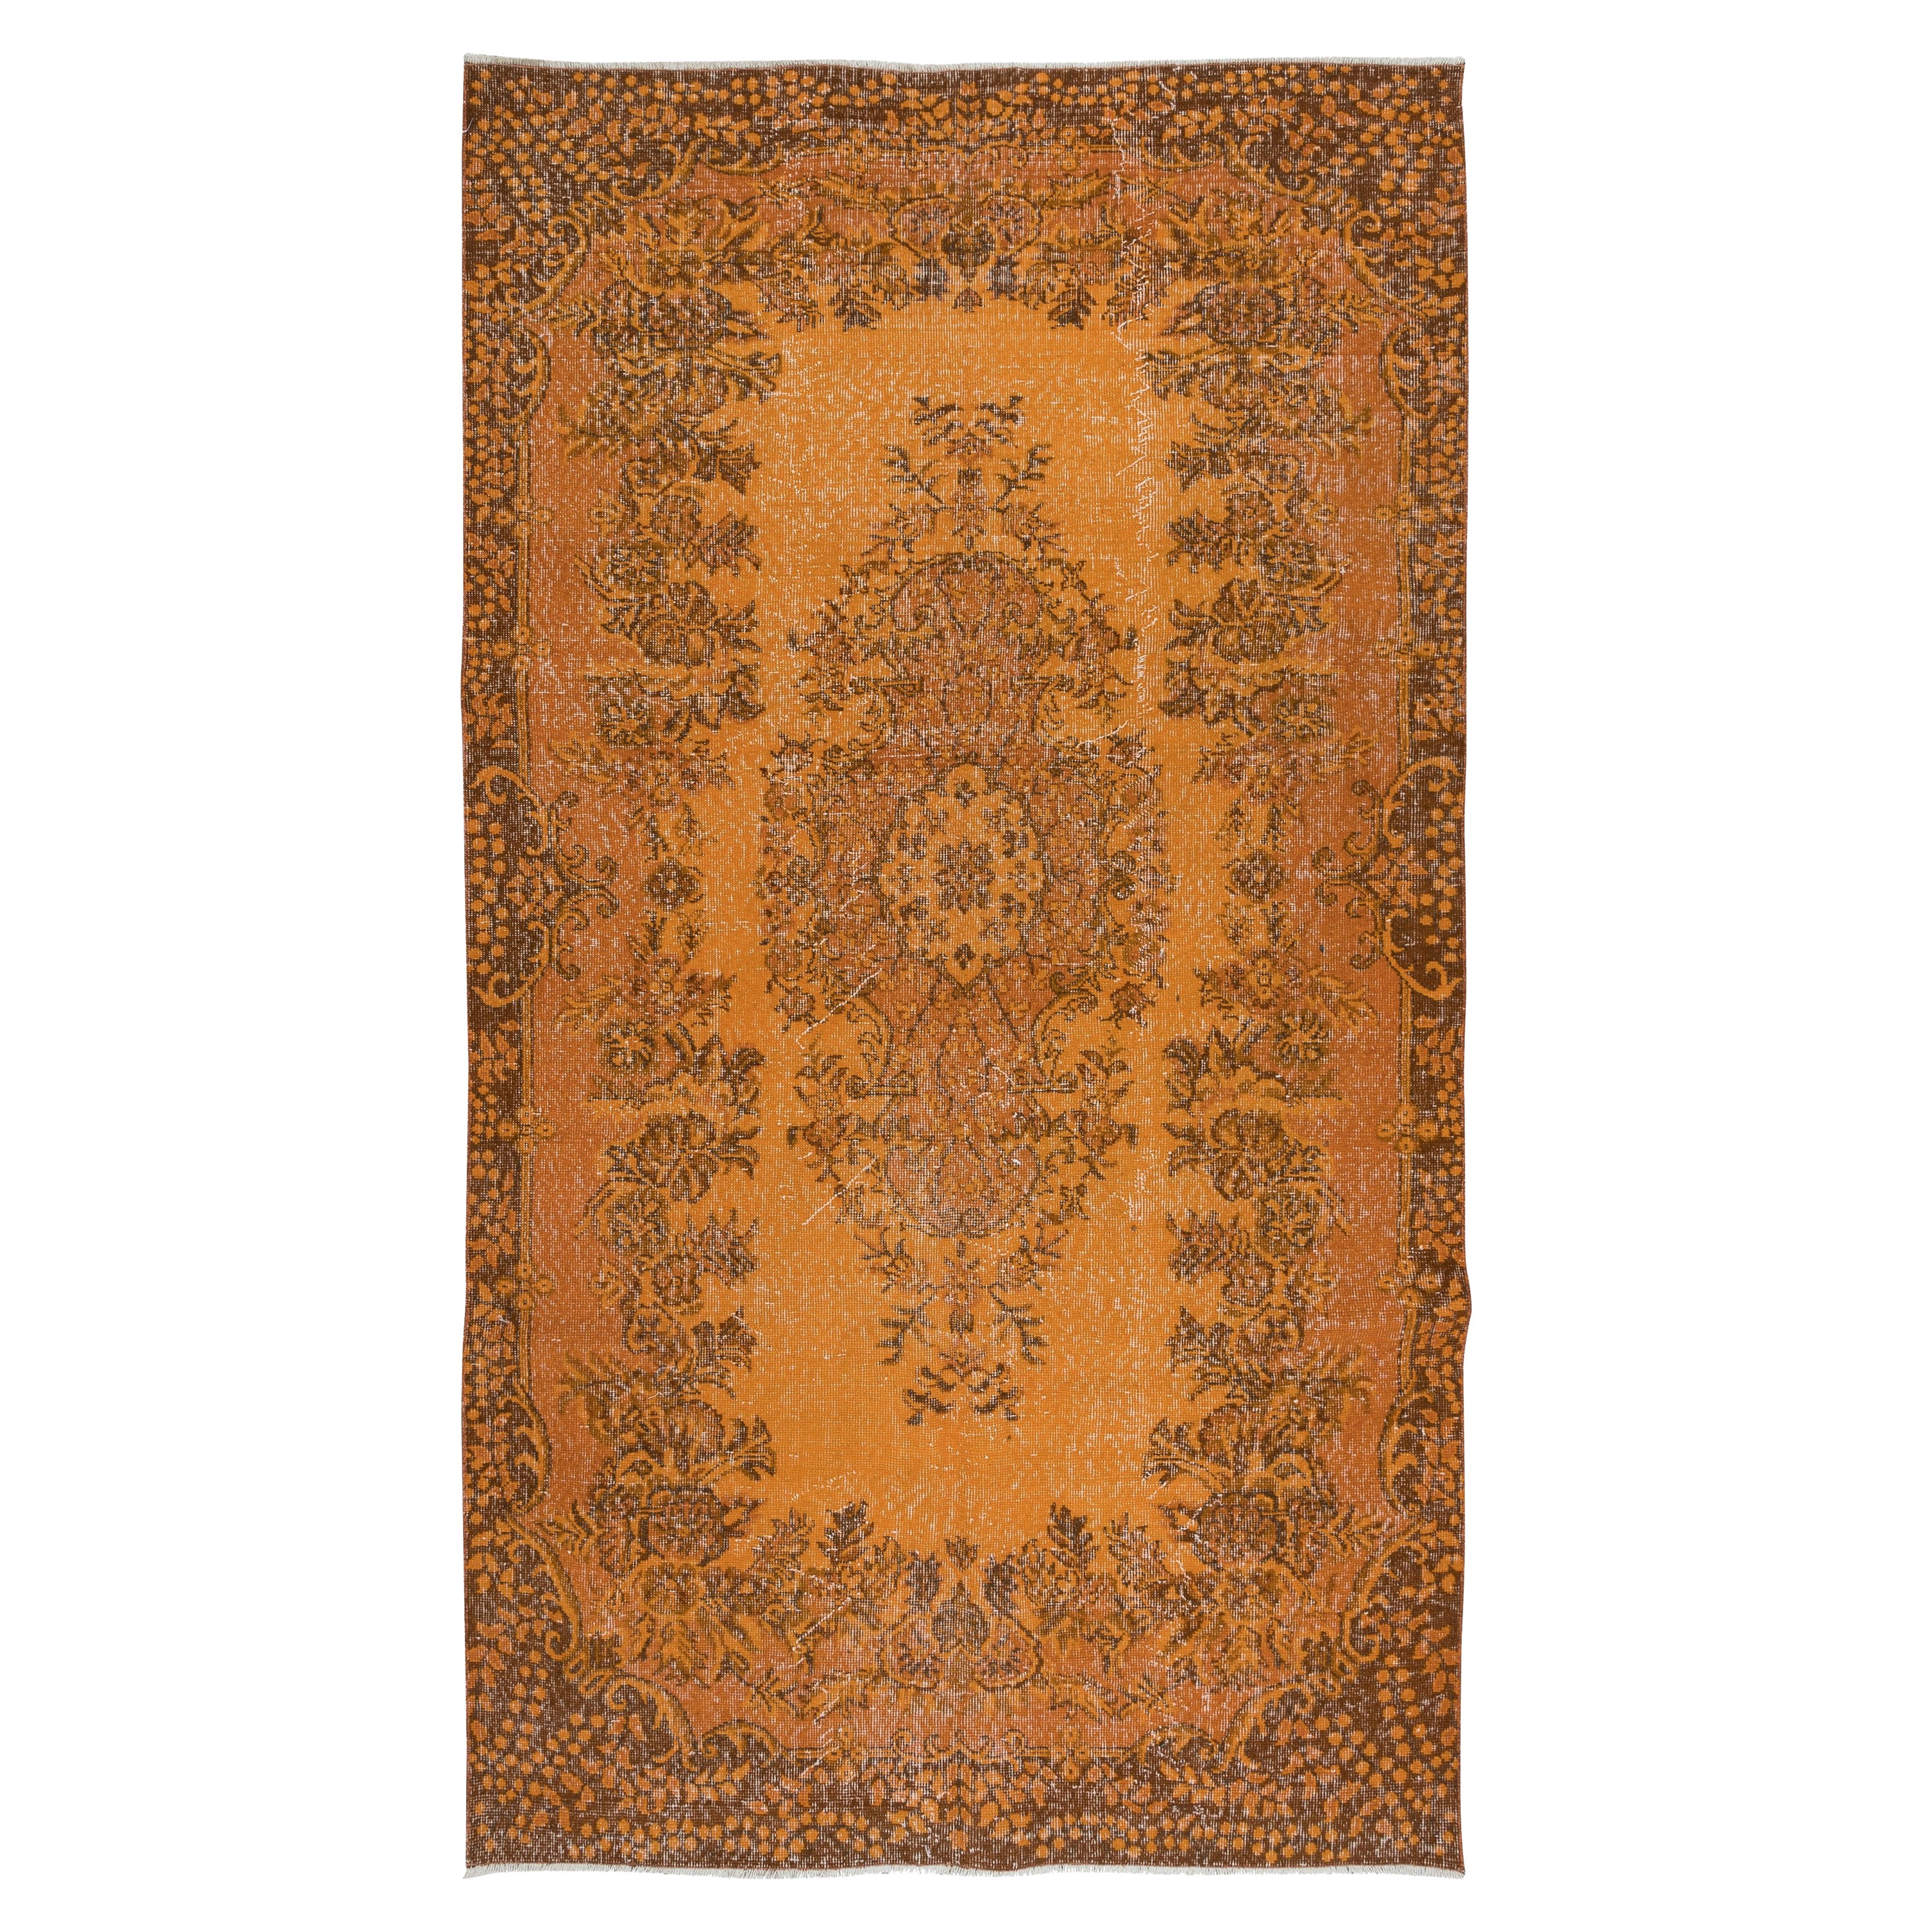 5.2x9 Ft Handmade Turkish Salon Rug in Orange, Modern Bedroom Wool Carpet For Sale